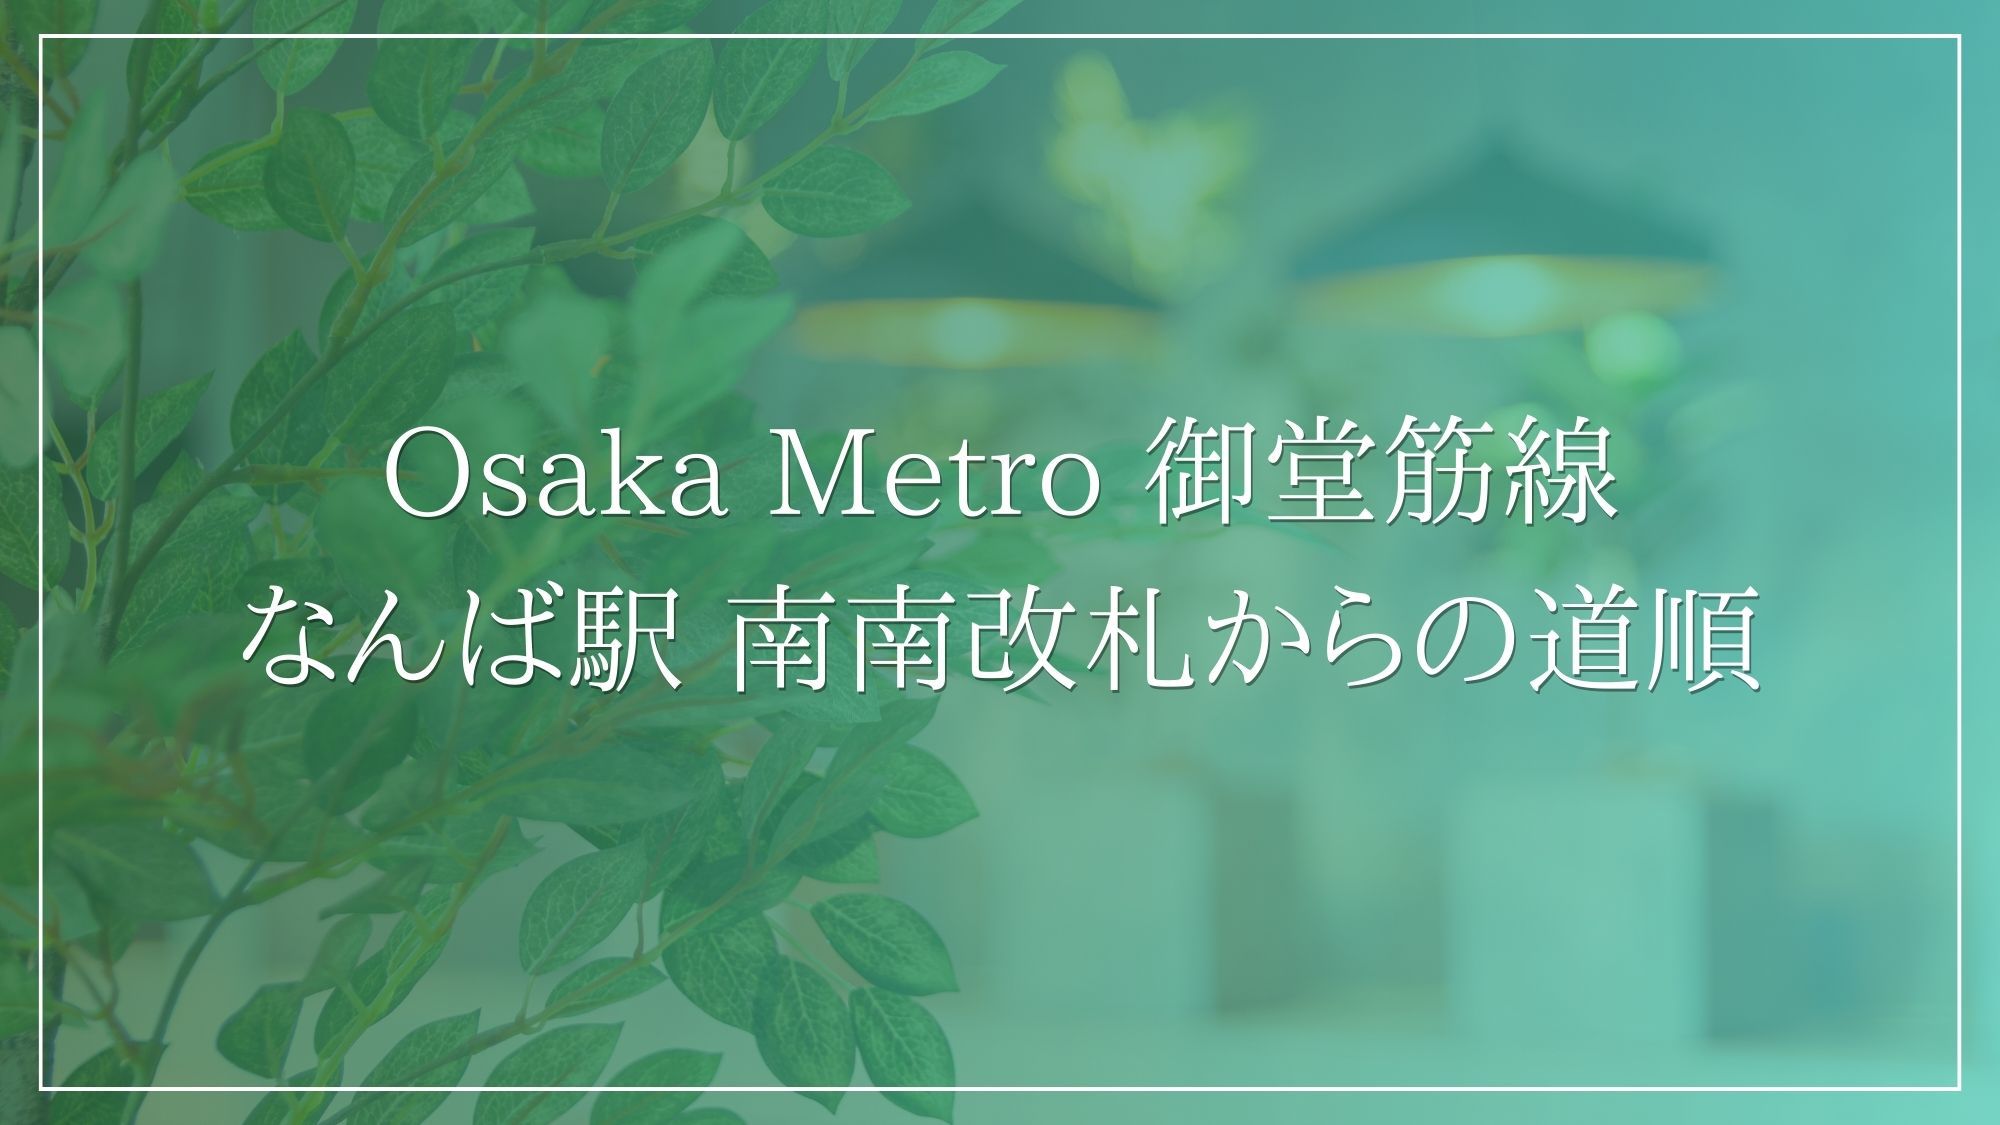 ＜Osaka Metro 御堂筋線 なんば駅 南南改札よりご案内＞